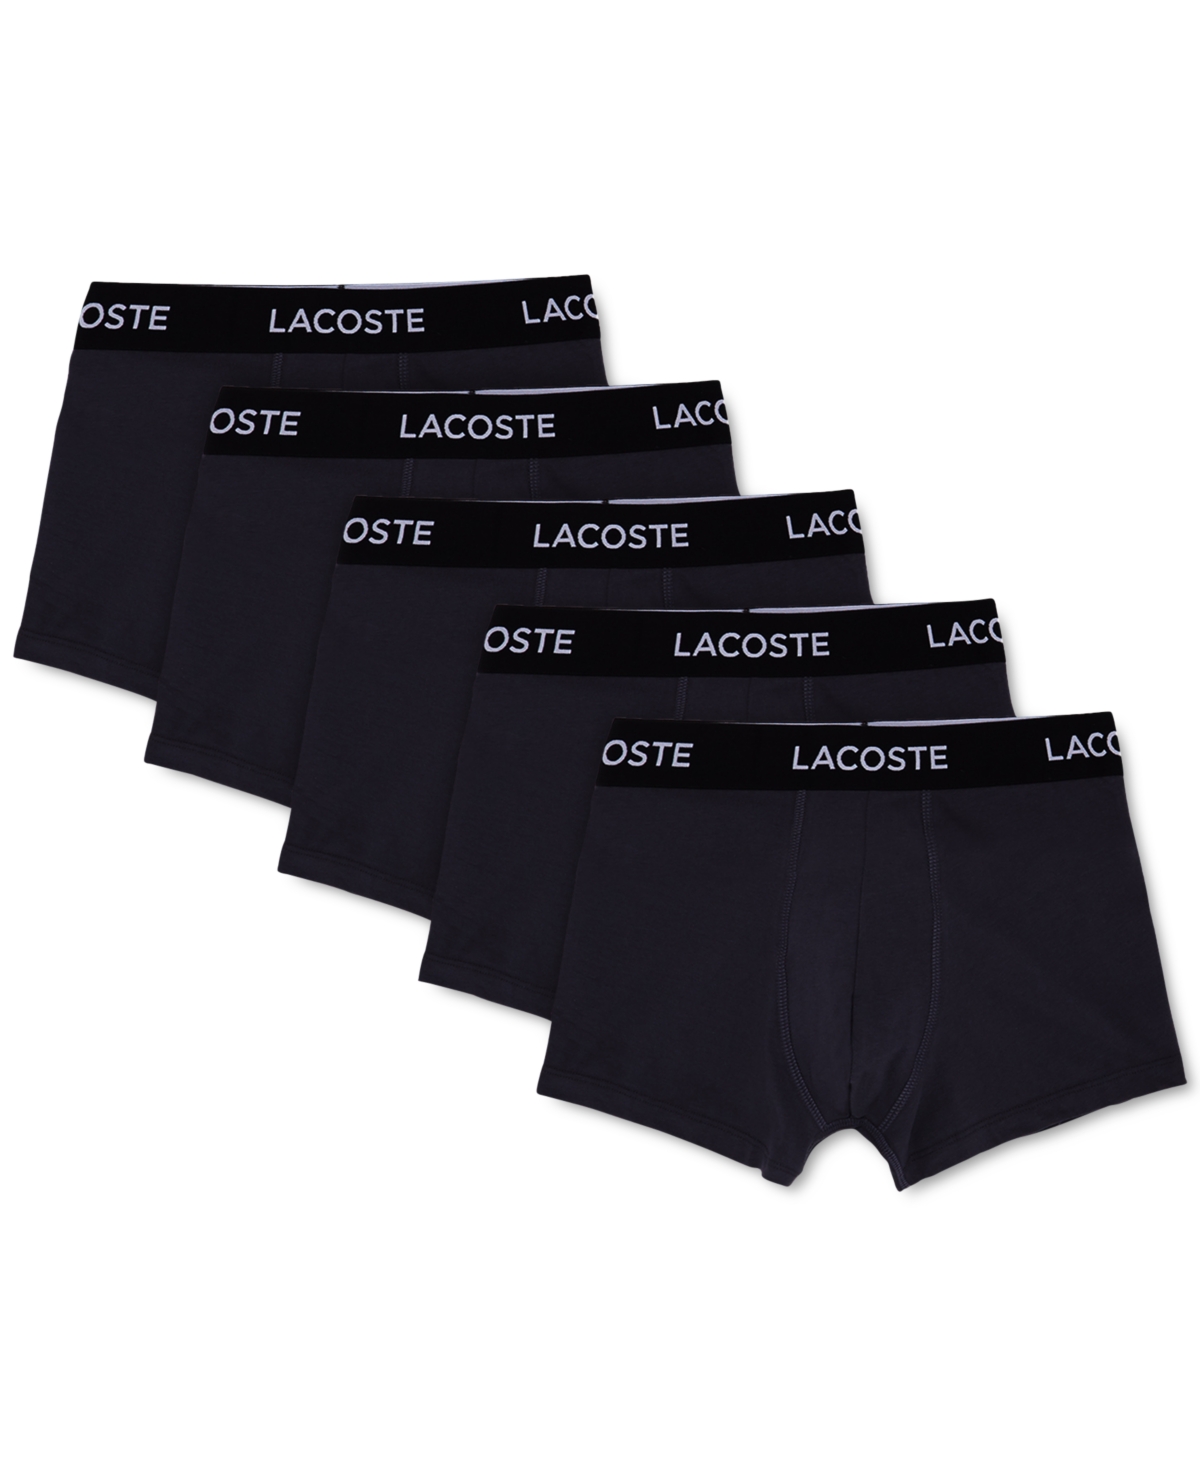 Lacoste Men's 5 Pack Cotton Trunk Underwear In Black